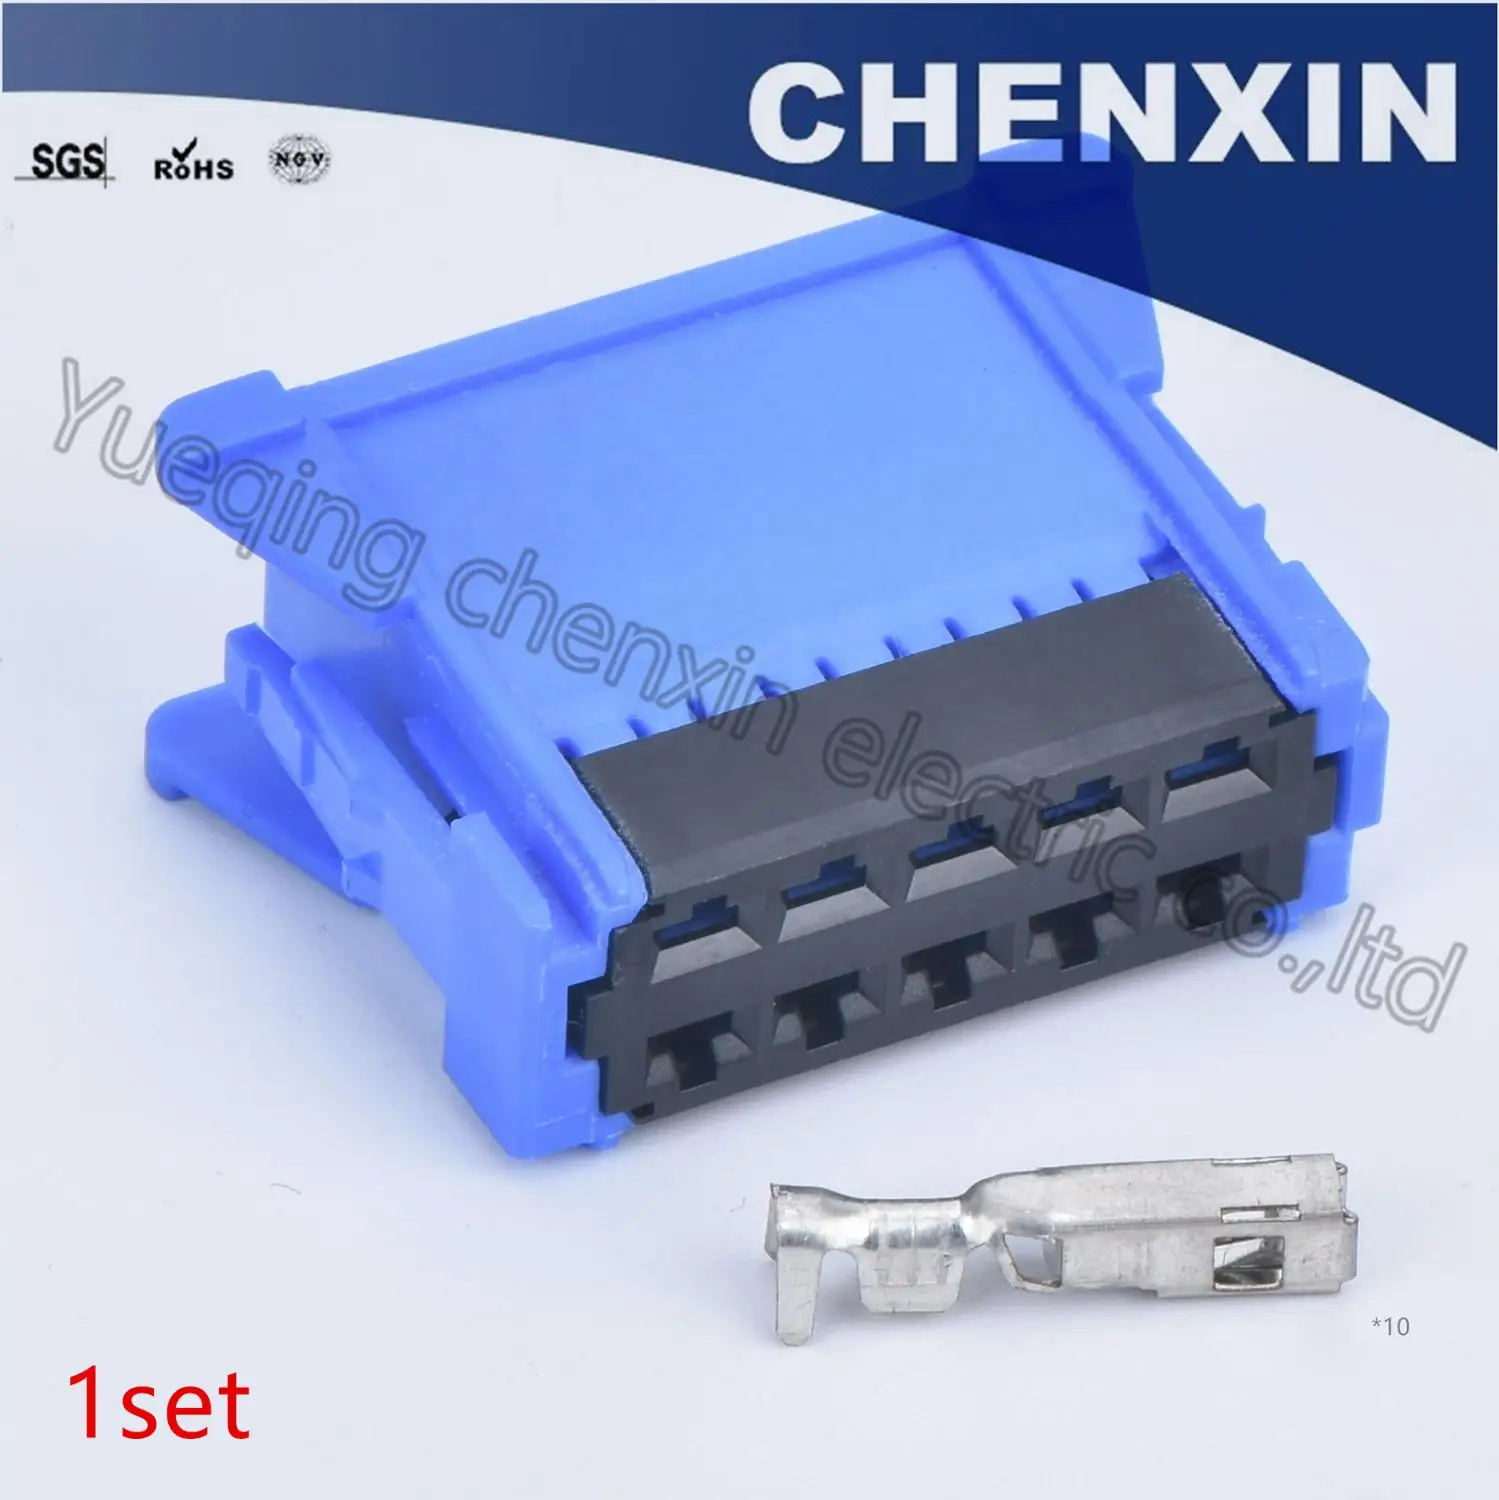 

Blue 10 pin automotive blower resistor plug 2.8 female 98174-1004 auto connectors housing plug plastic wire cable harness